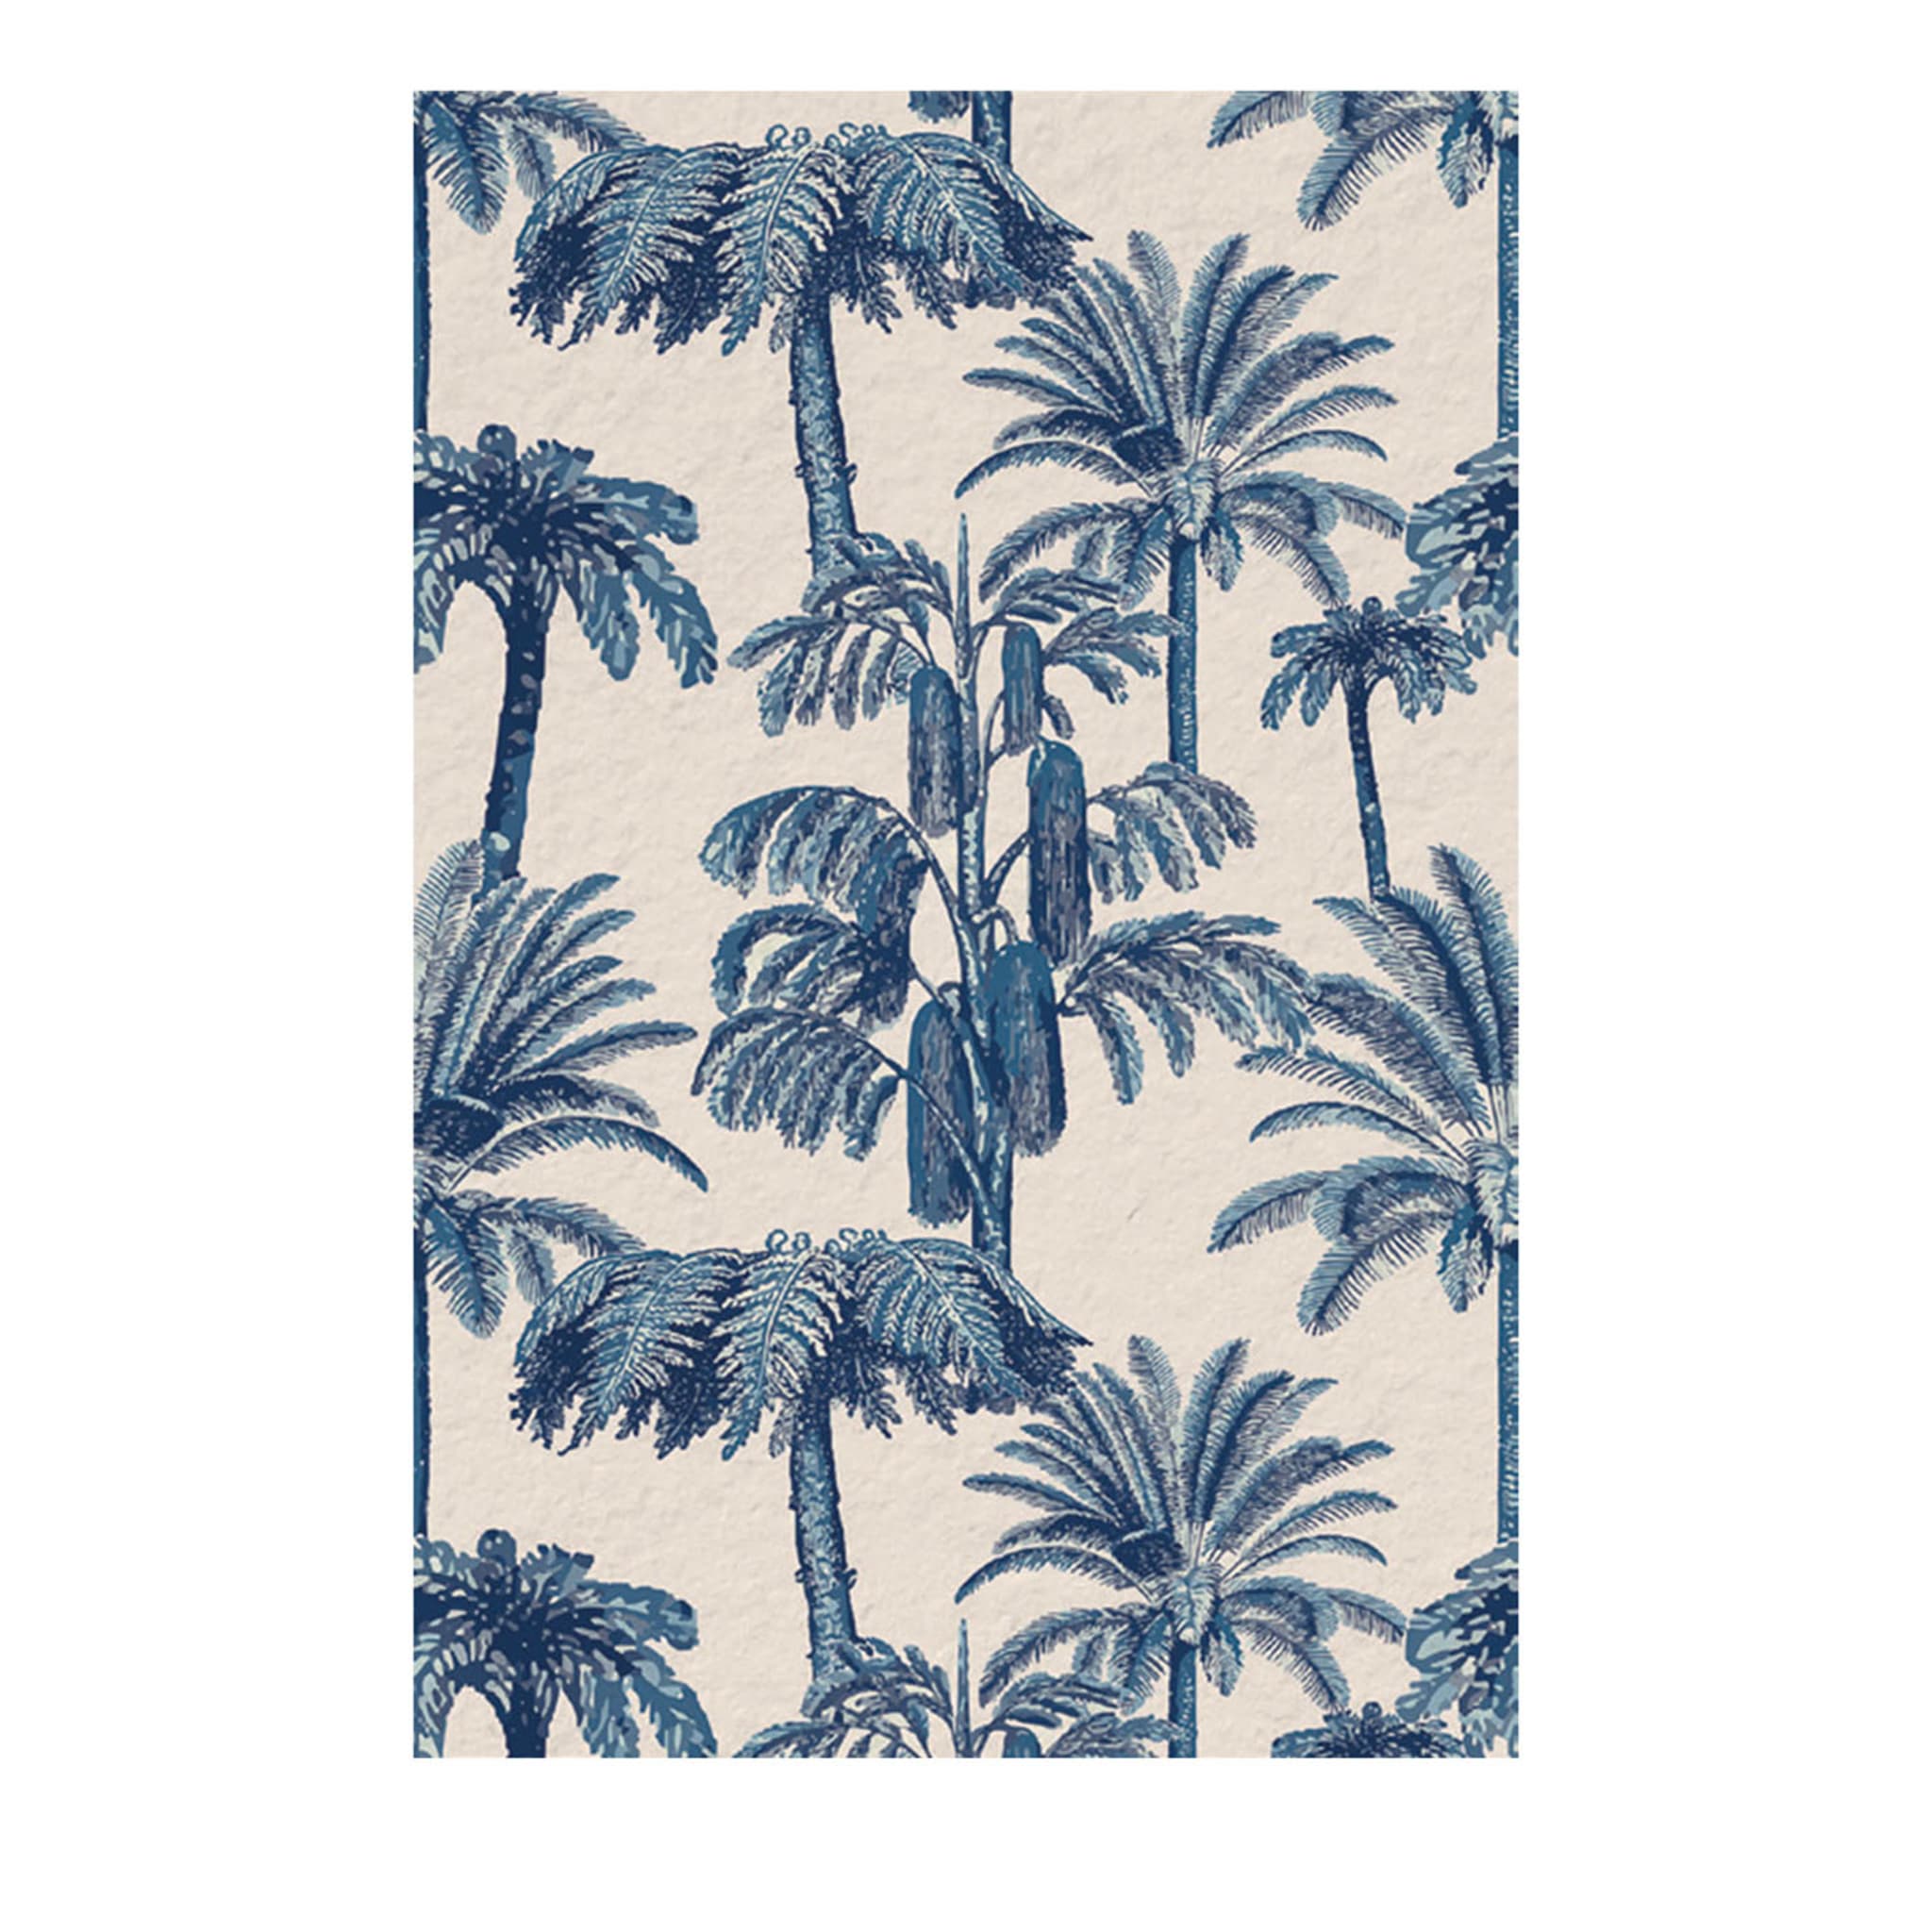 01 Blue Palms Outdoor Wallpaper - Main view